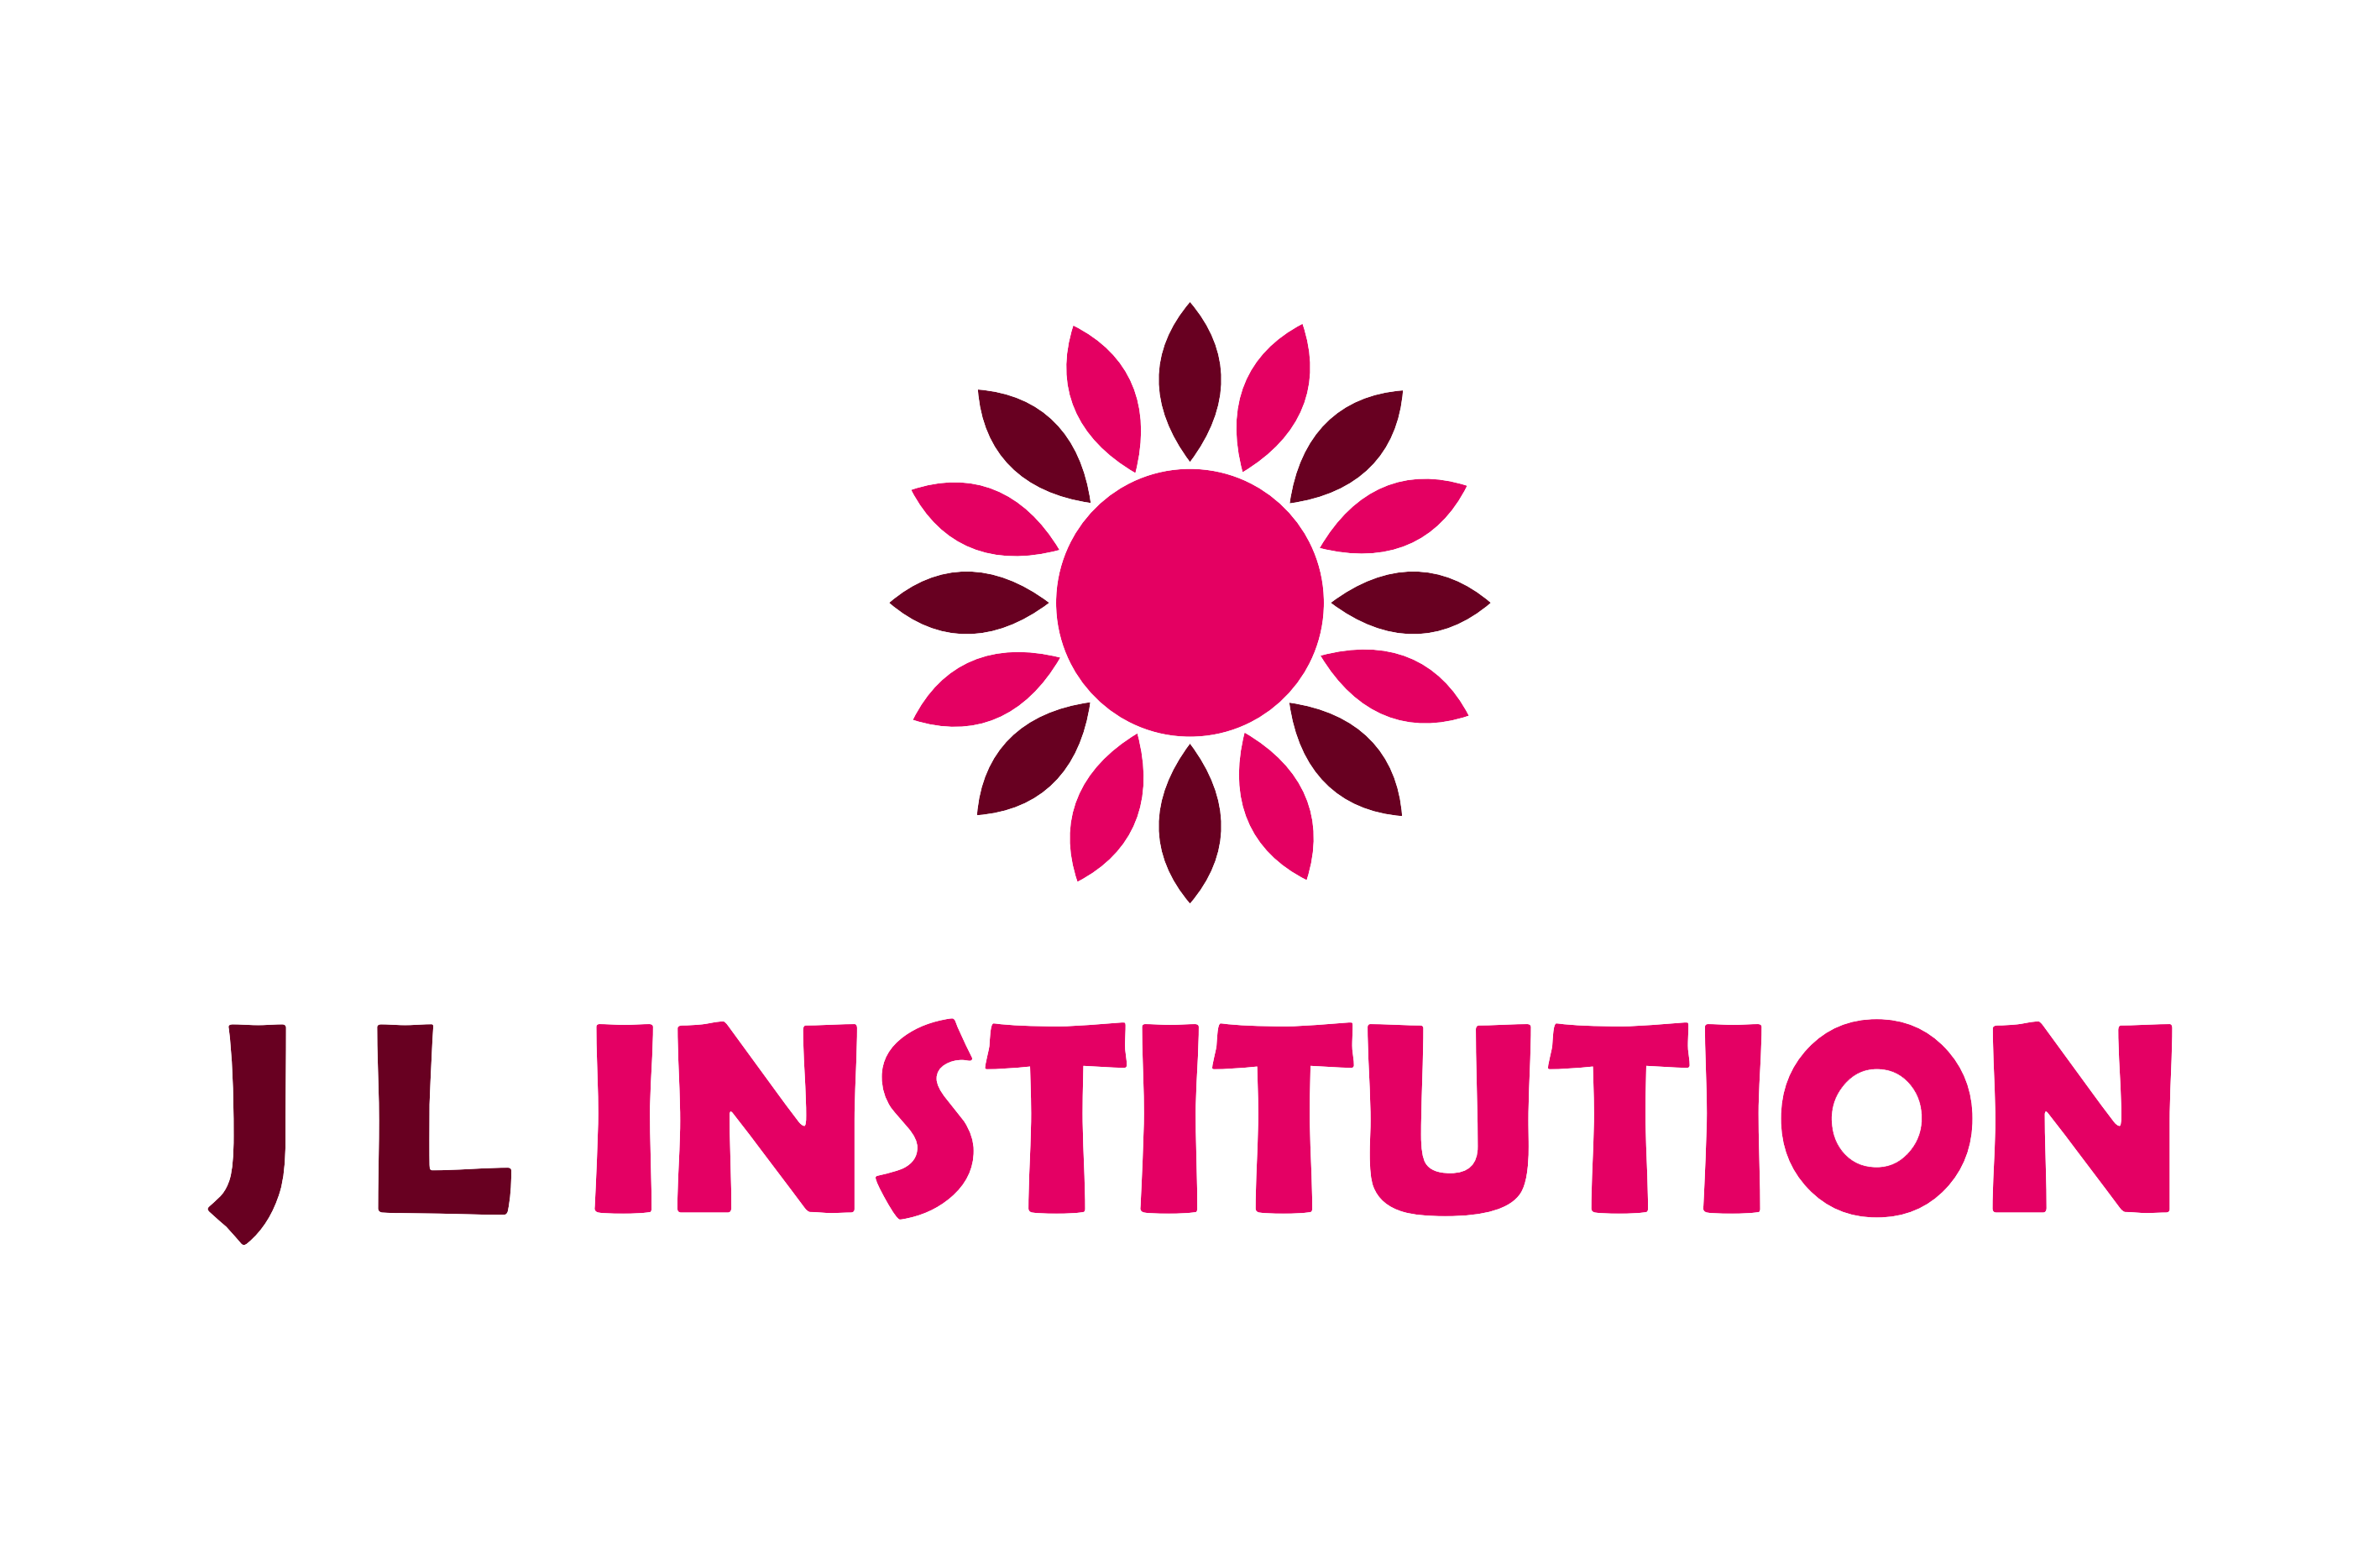 J L Institution